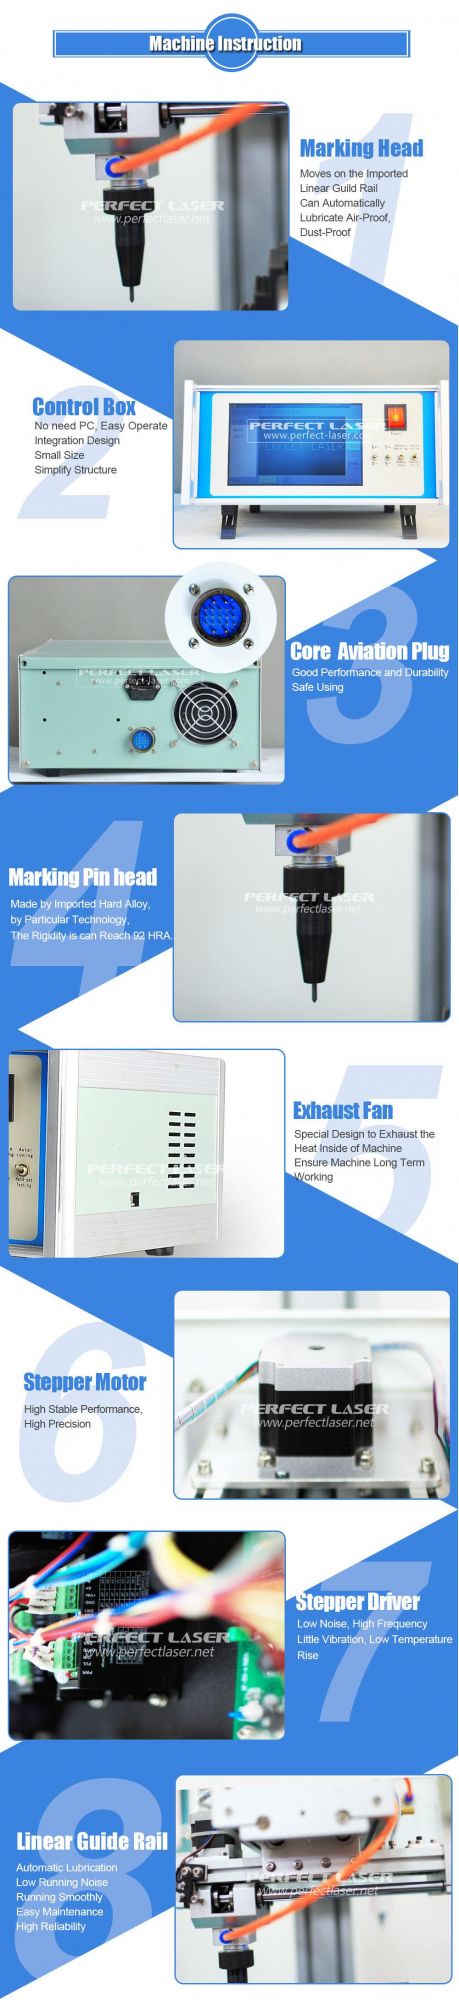 Peqd-025e LCD Control Deep Engraving Flat Rotary Metal Steel Stamp DOT Peen Marking Machine